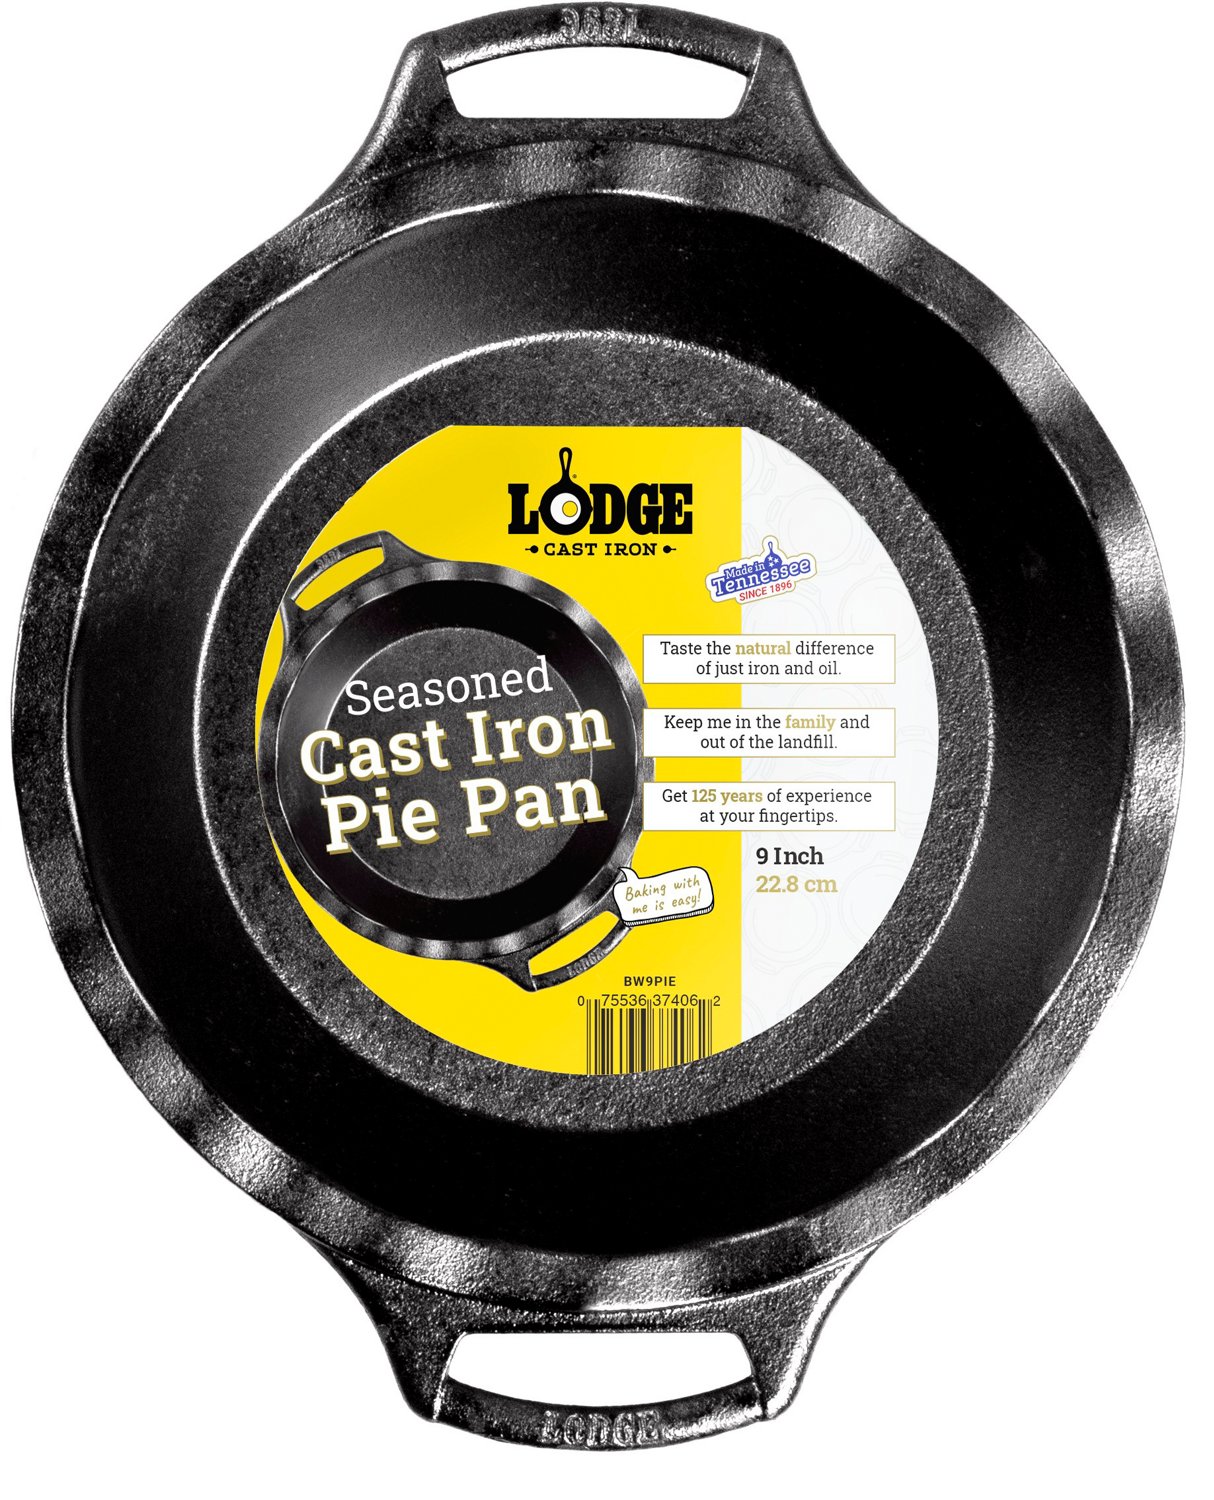 Lodge Seasoned Cast Iron Pie Pan Review: Indestructible